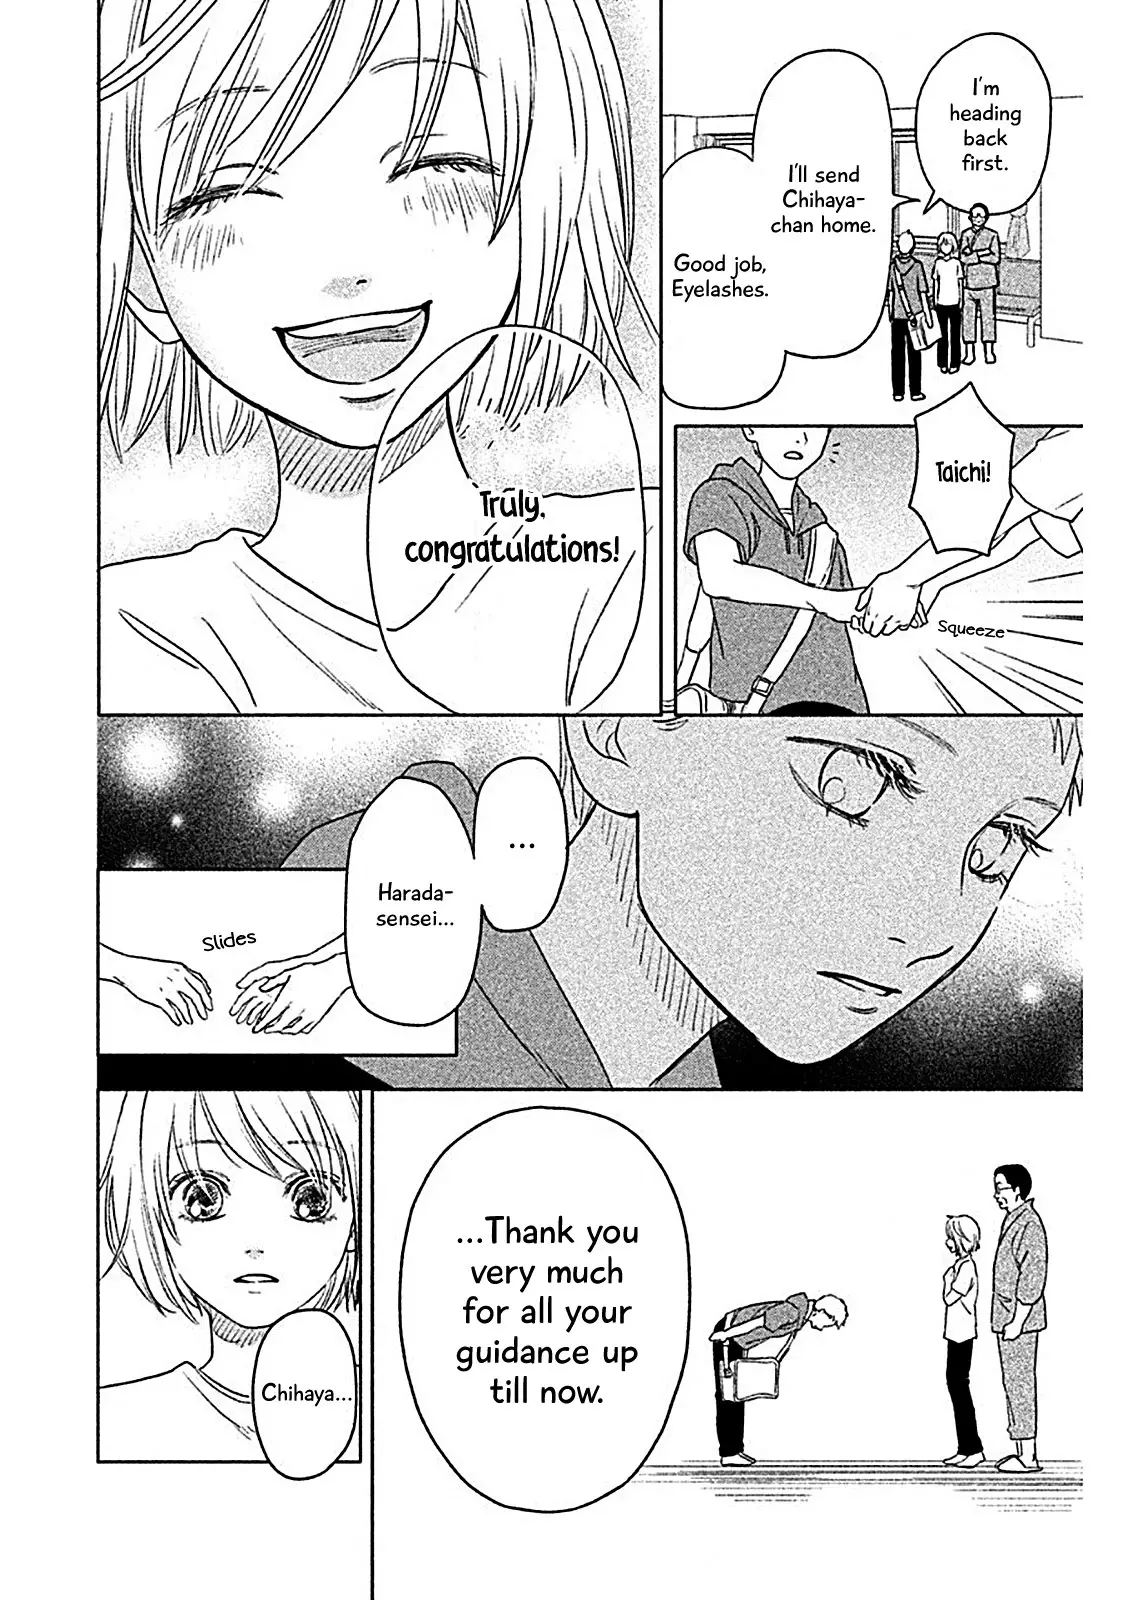 Chihayafuru: Middle School Arc - 1 page 31